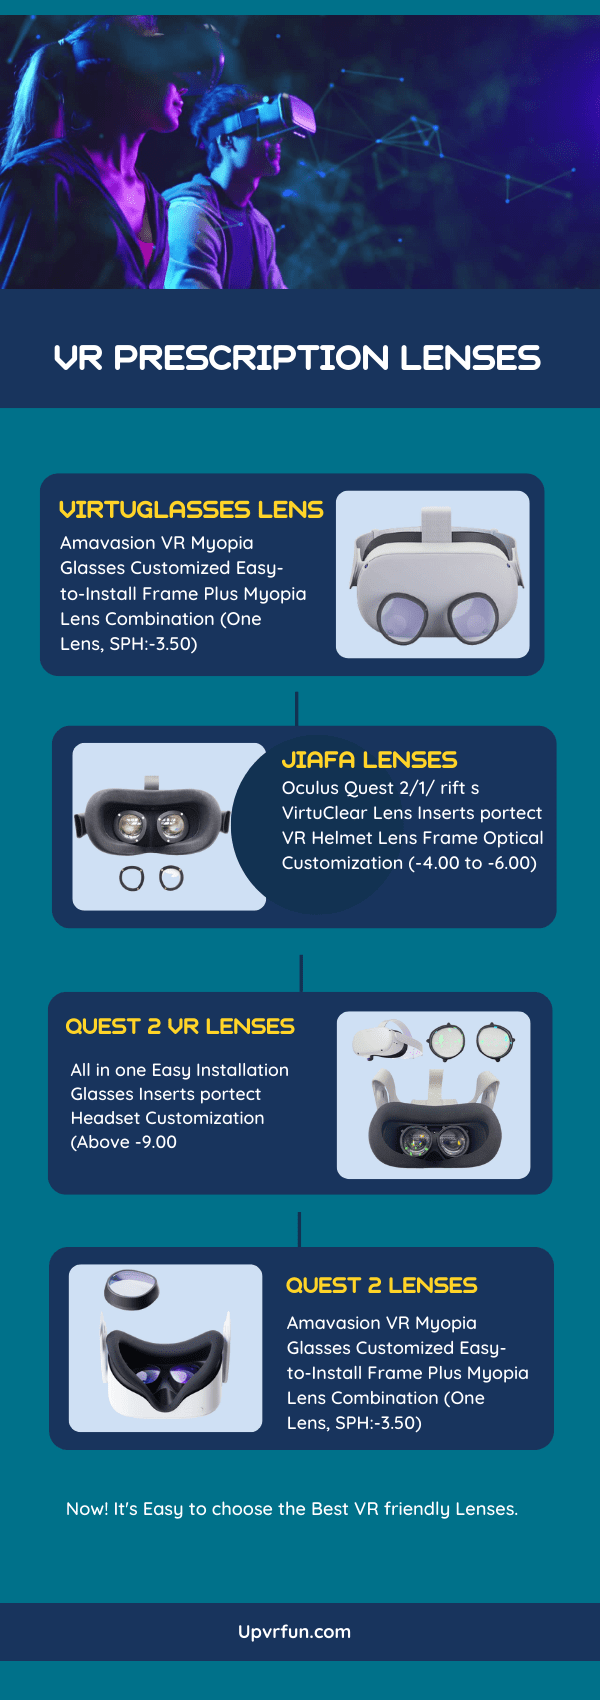 Best VR Prescription Lenses for Oculus Quest 2